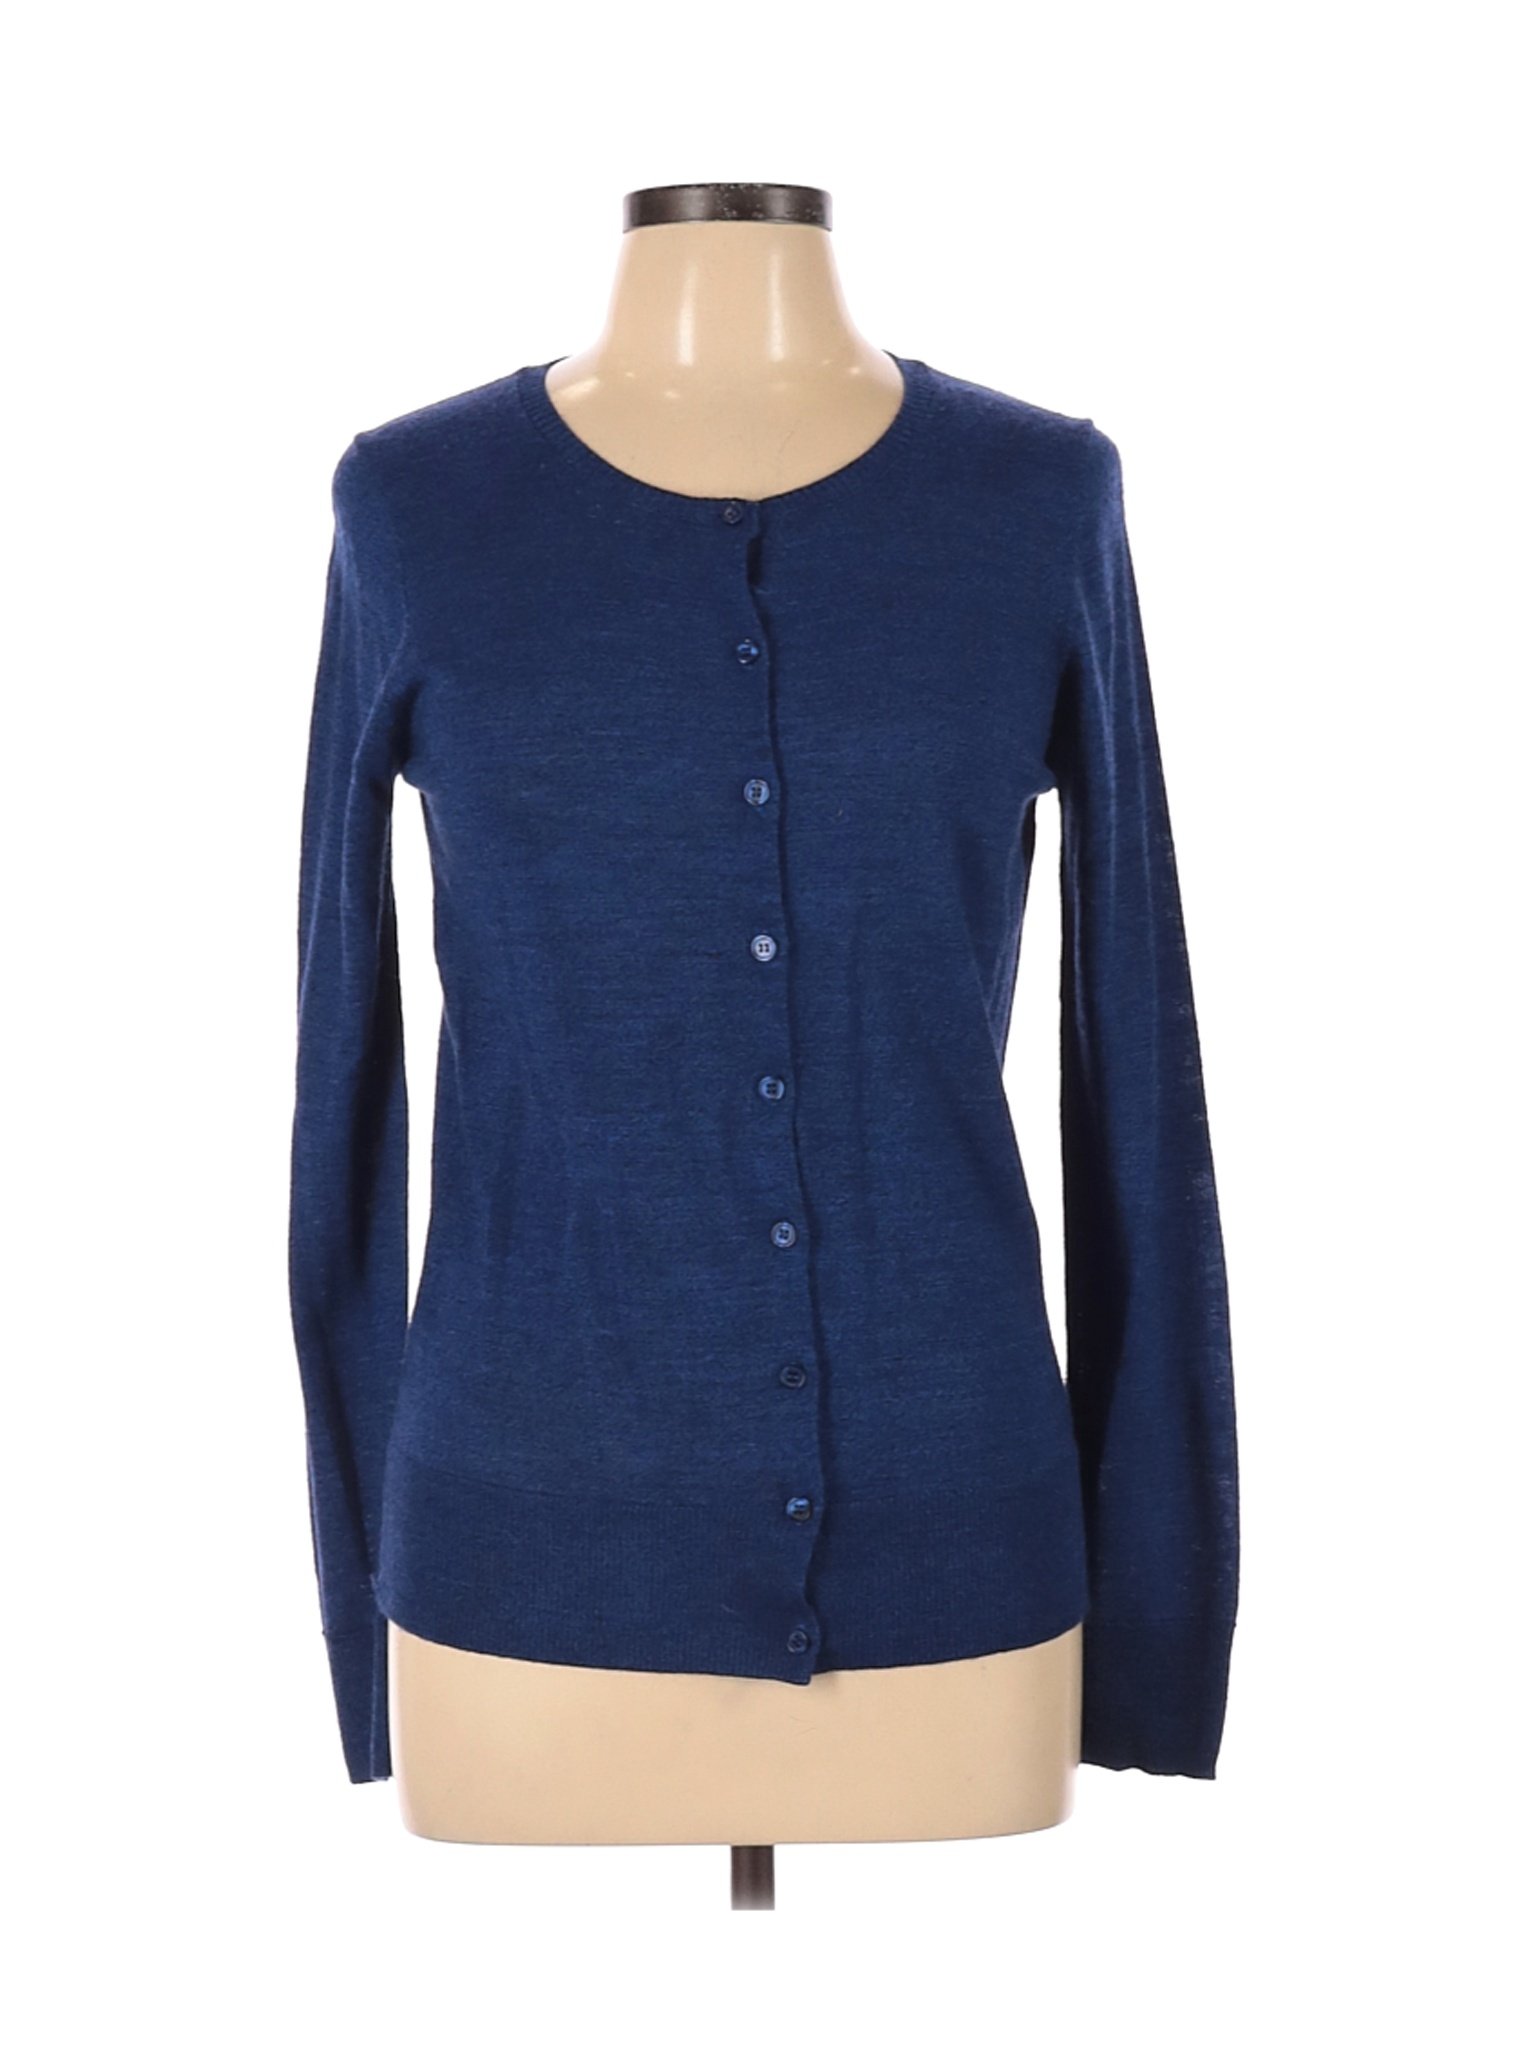 The Limited Women Blue Cardigan L | eBay